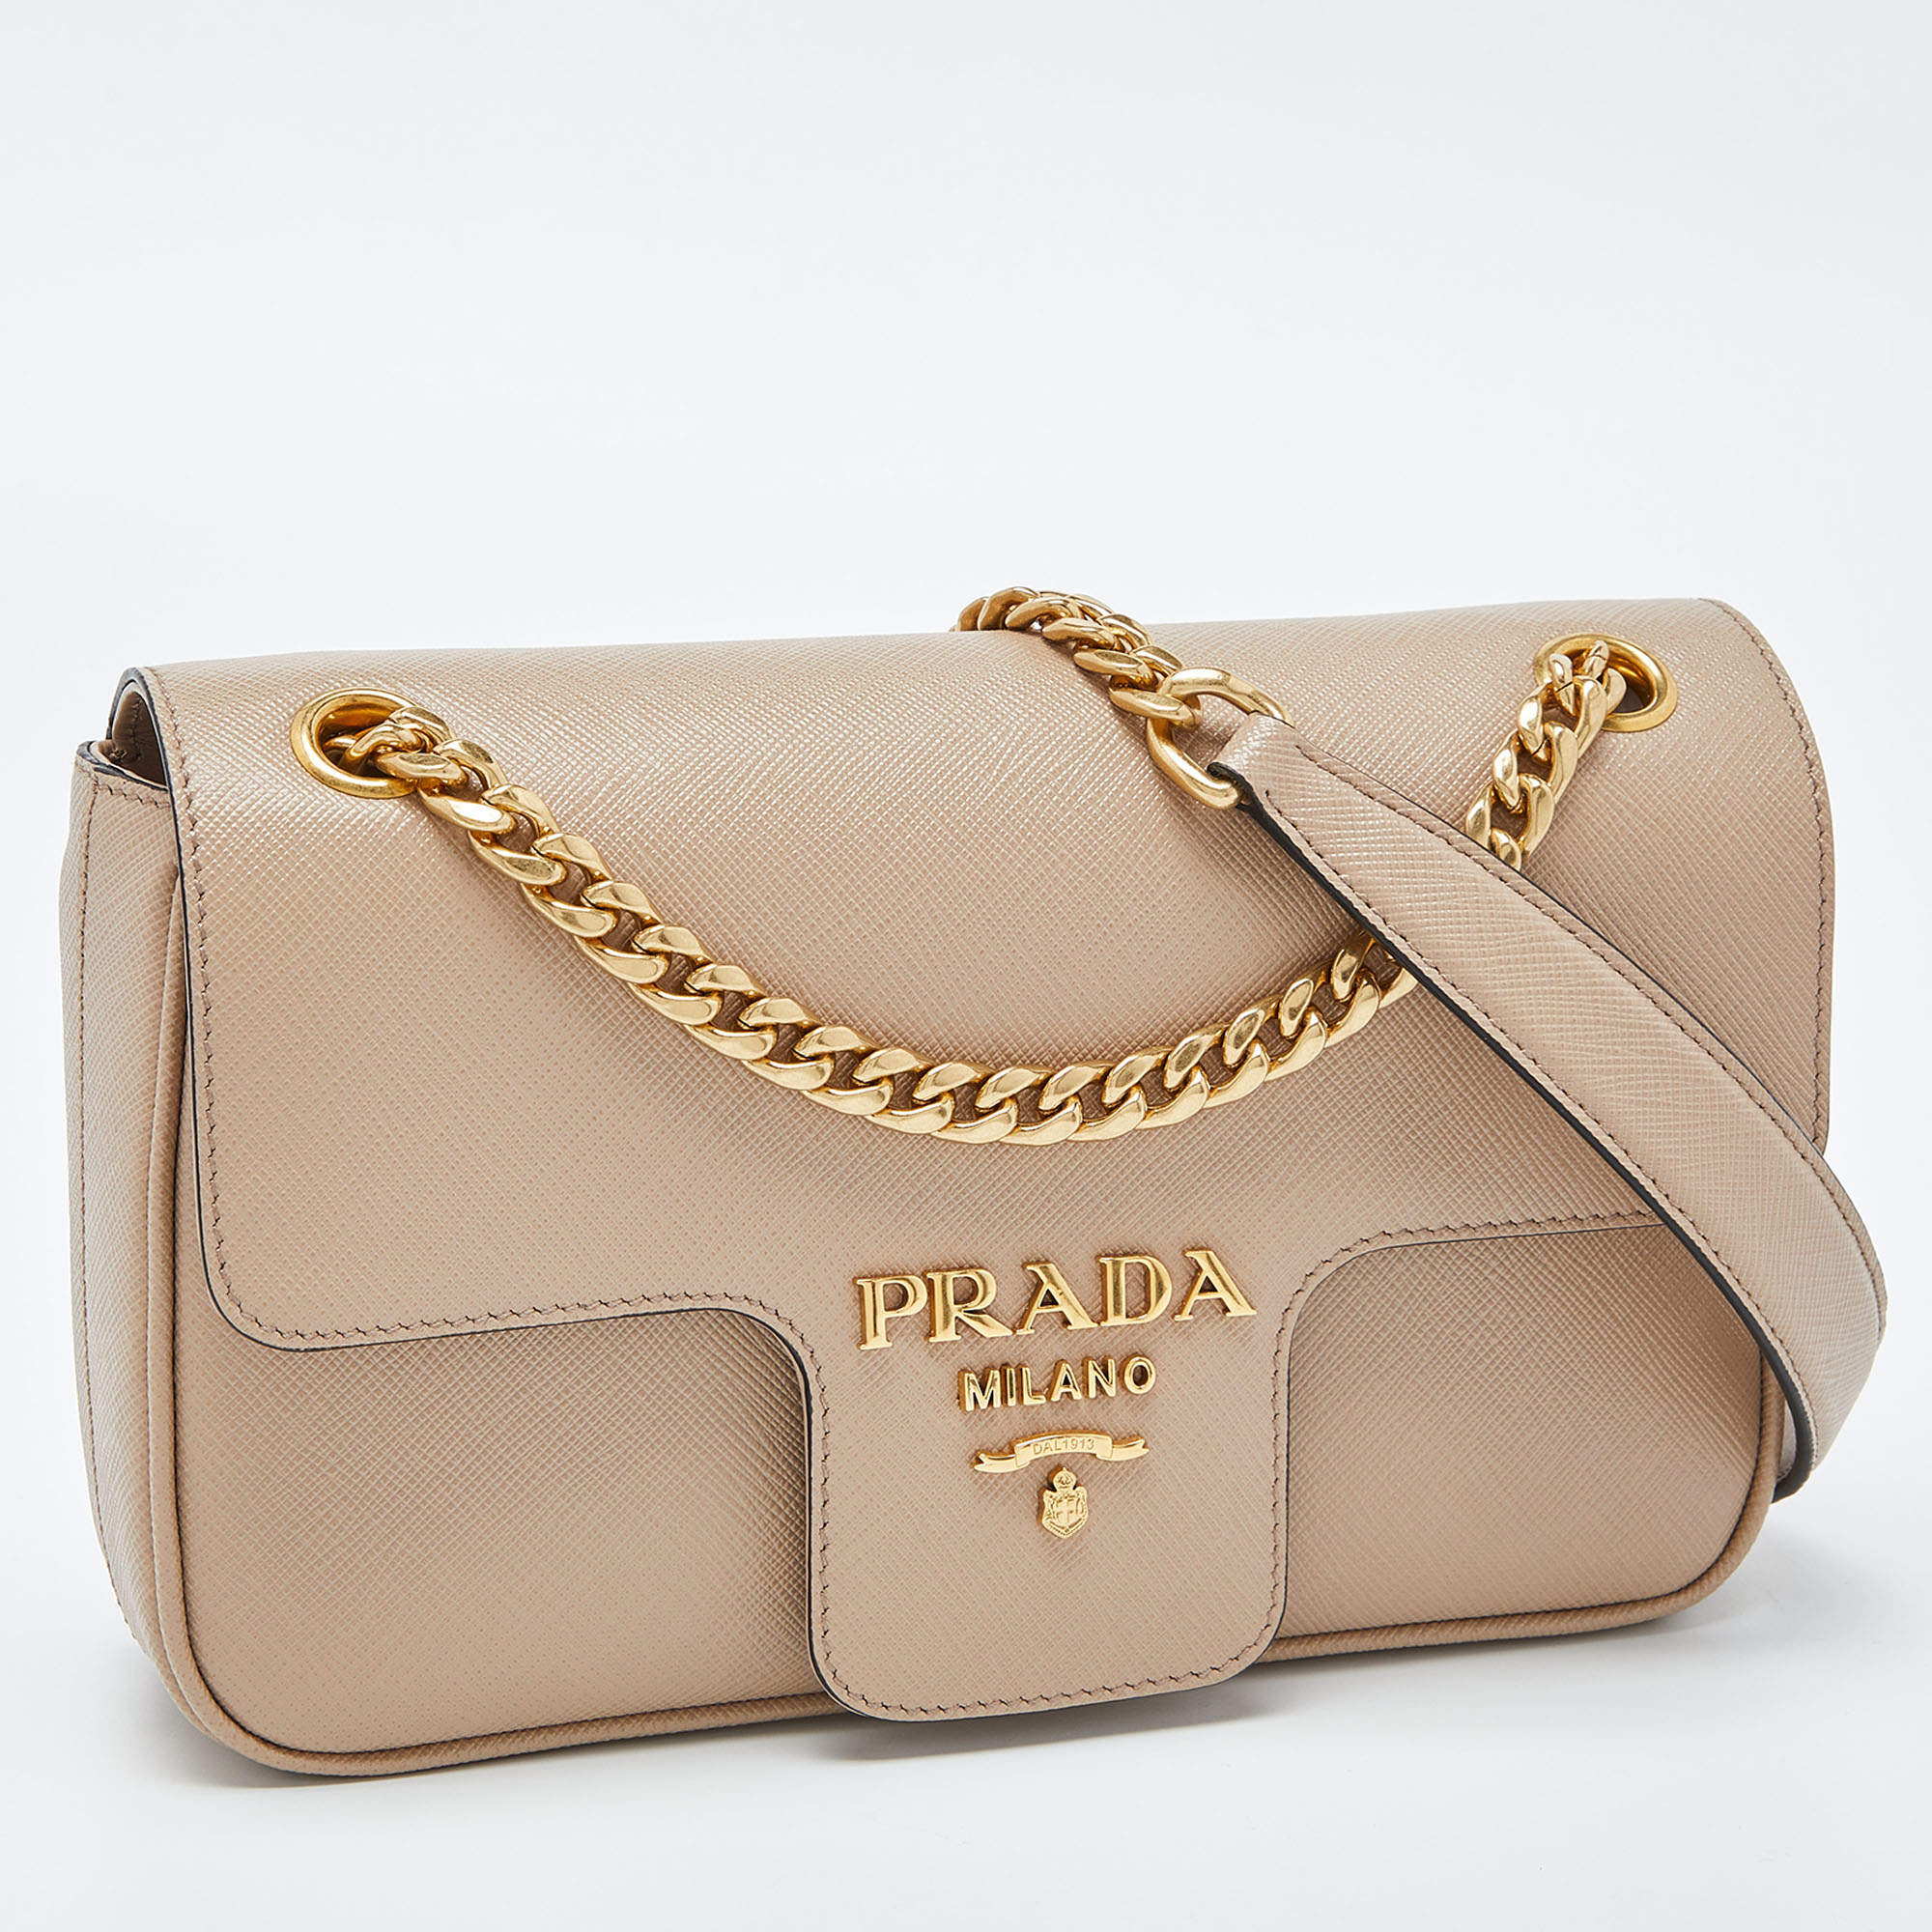 Pattina Flap Shoulder Bag Saffiano Leather Small